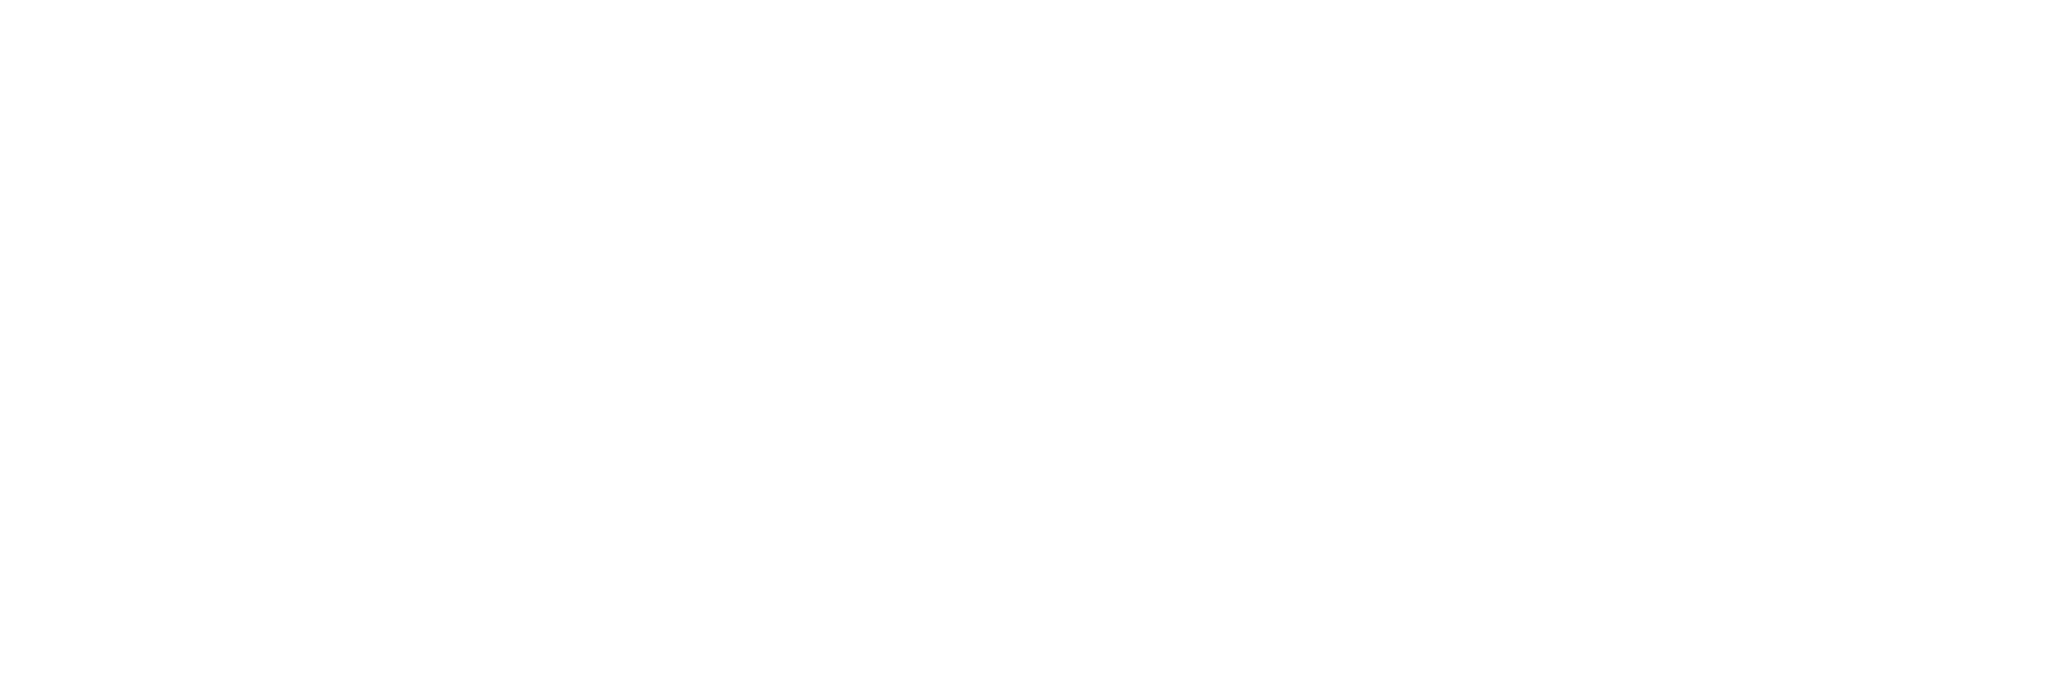 Meta signal lite logo desktop